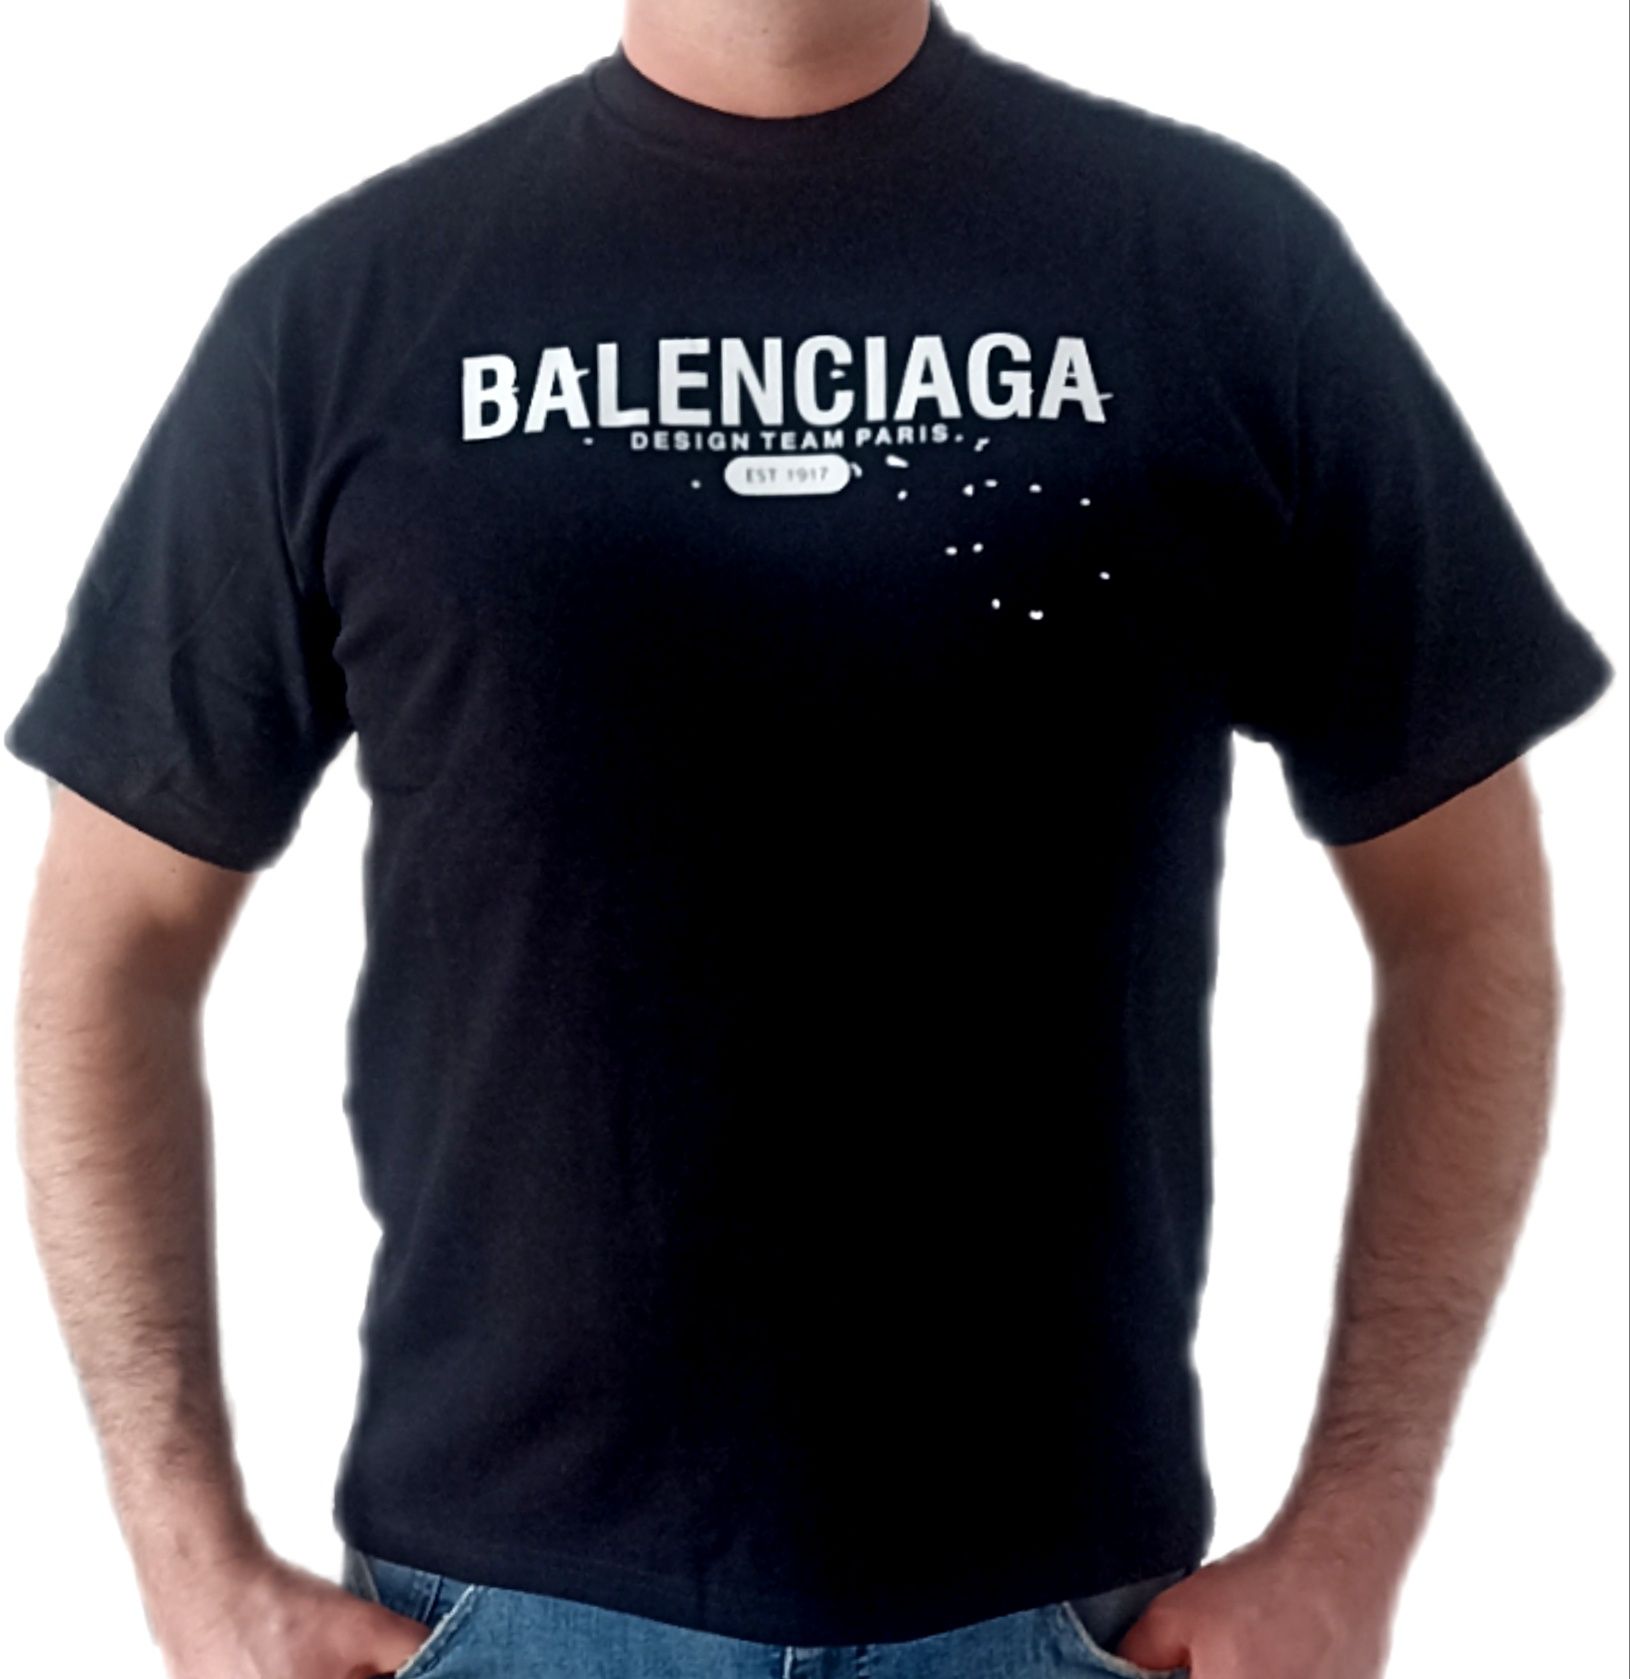 Balenciaga t-shirt koszulka r.S,M,L,XL,XXL